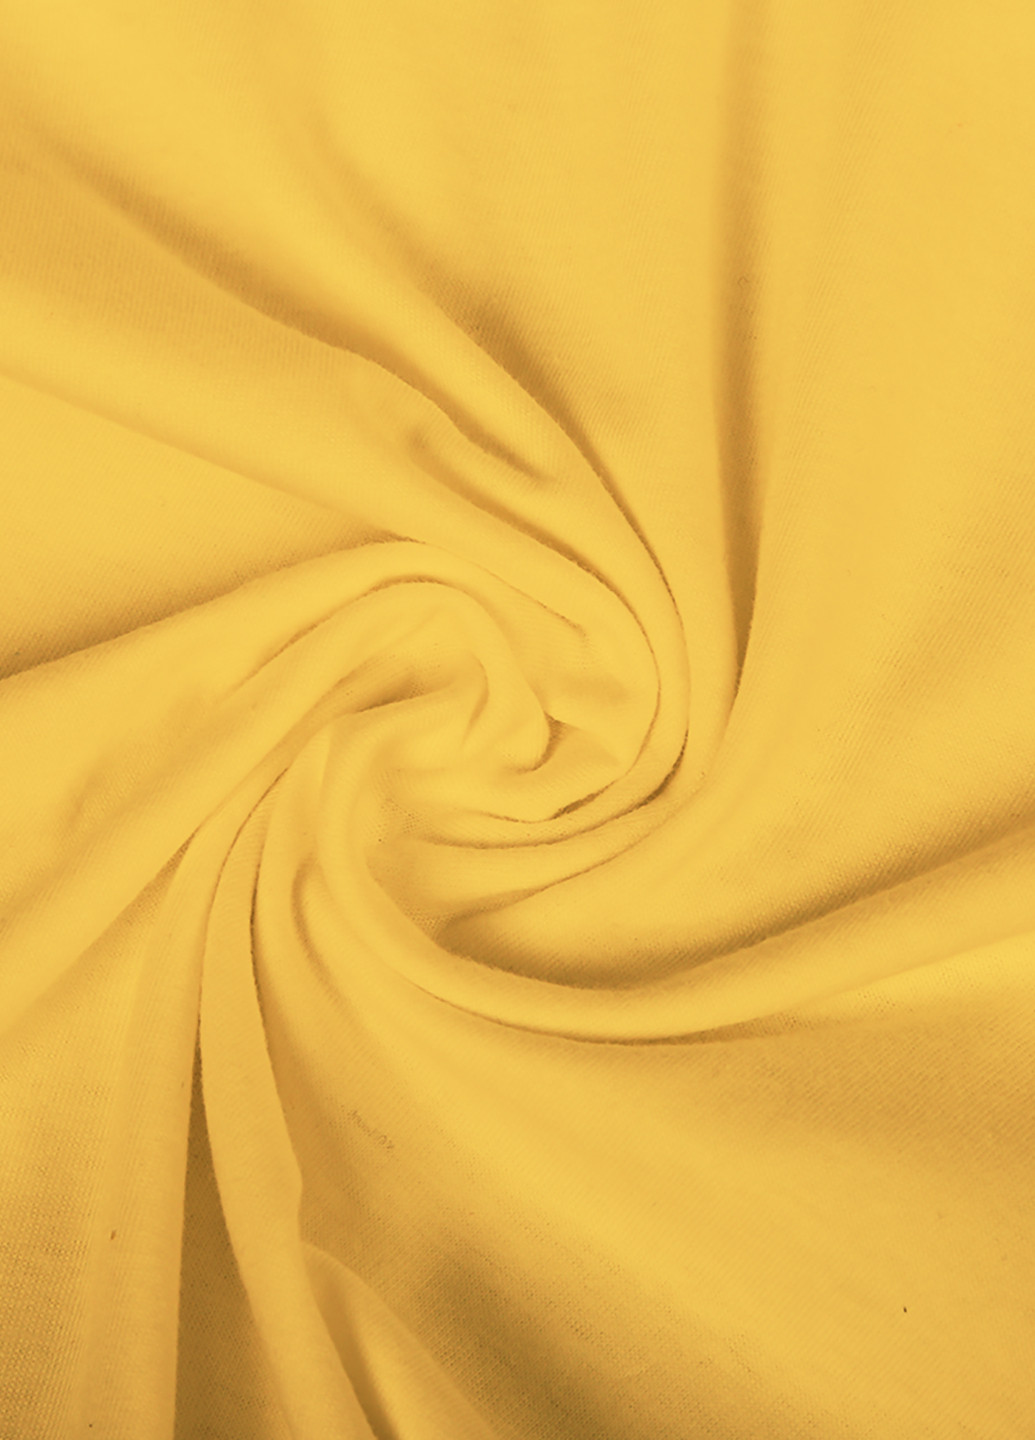 Желтая демисезонная футболка детская амонг ас желтый (among us yellow)(9224-2409) MobiPrint